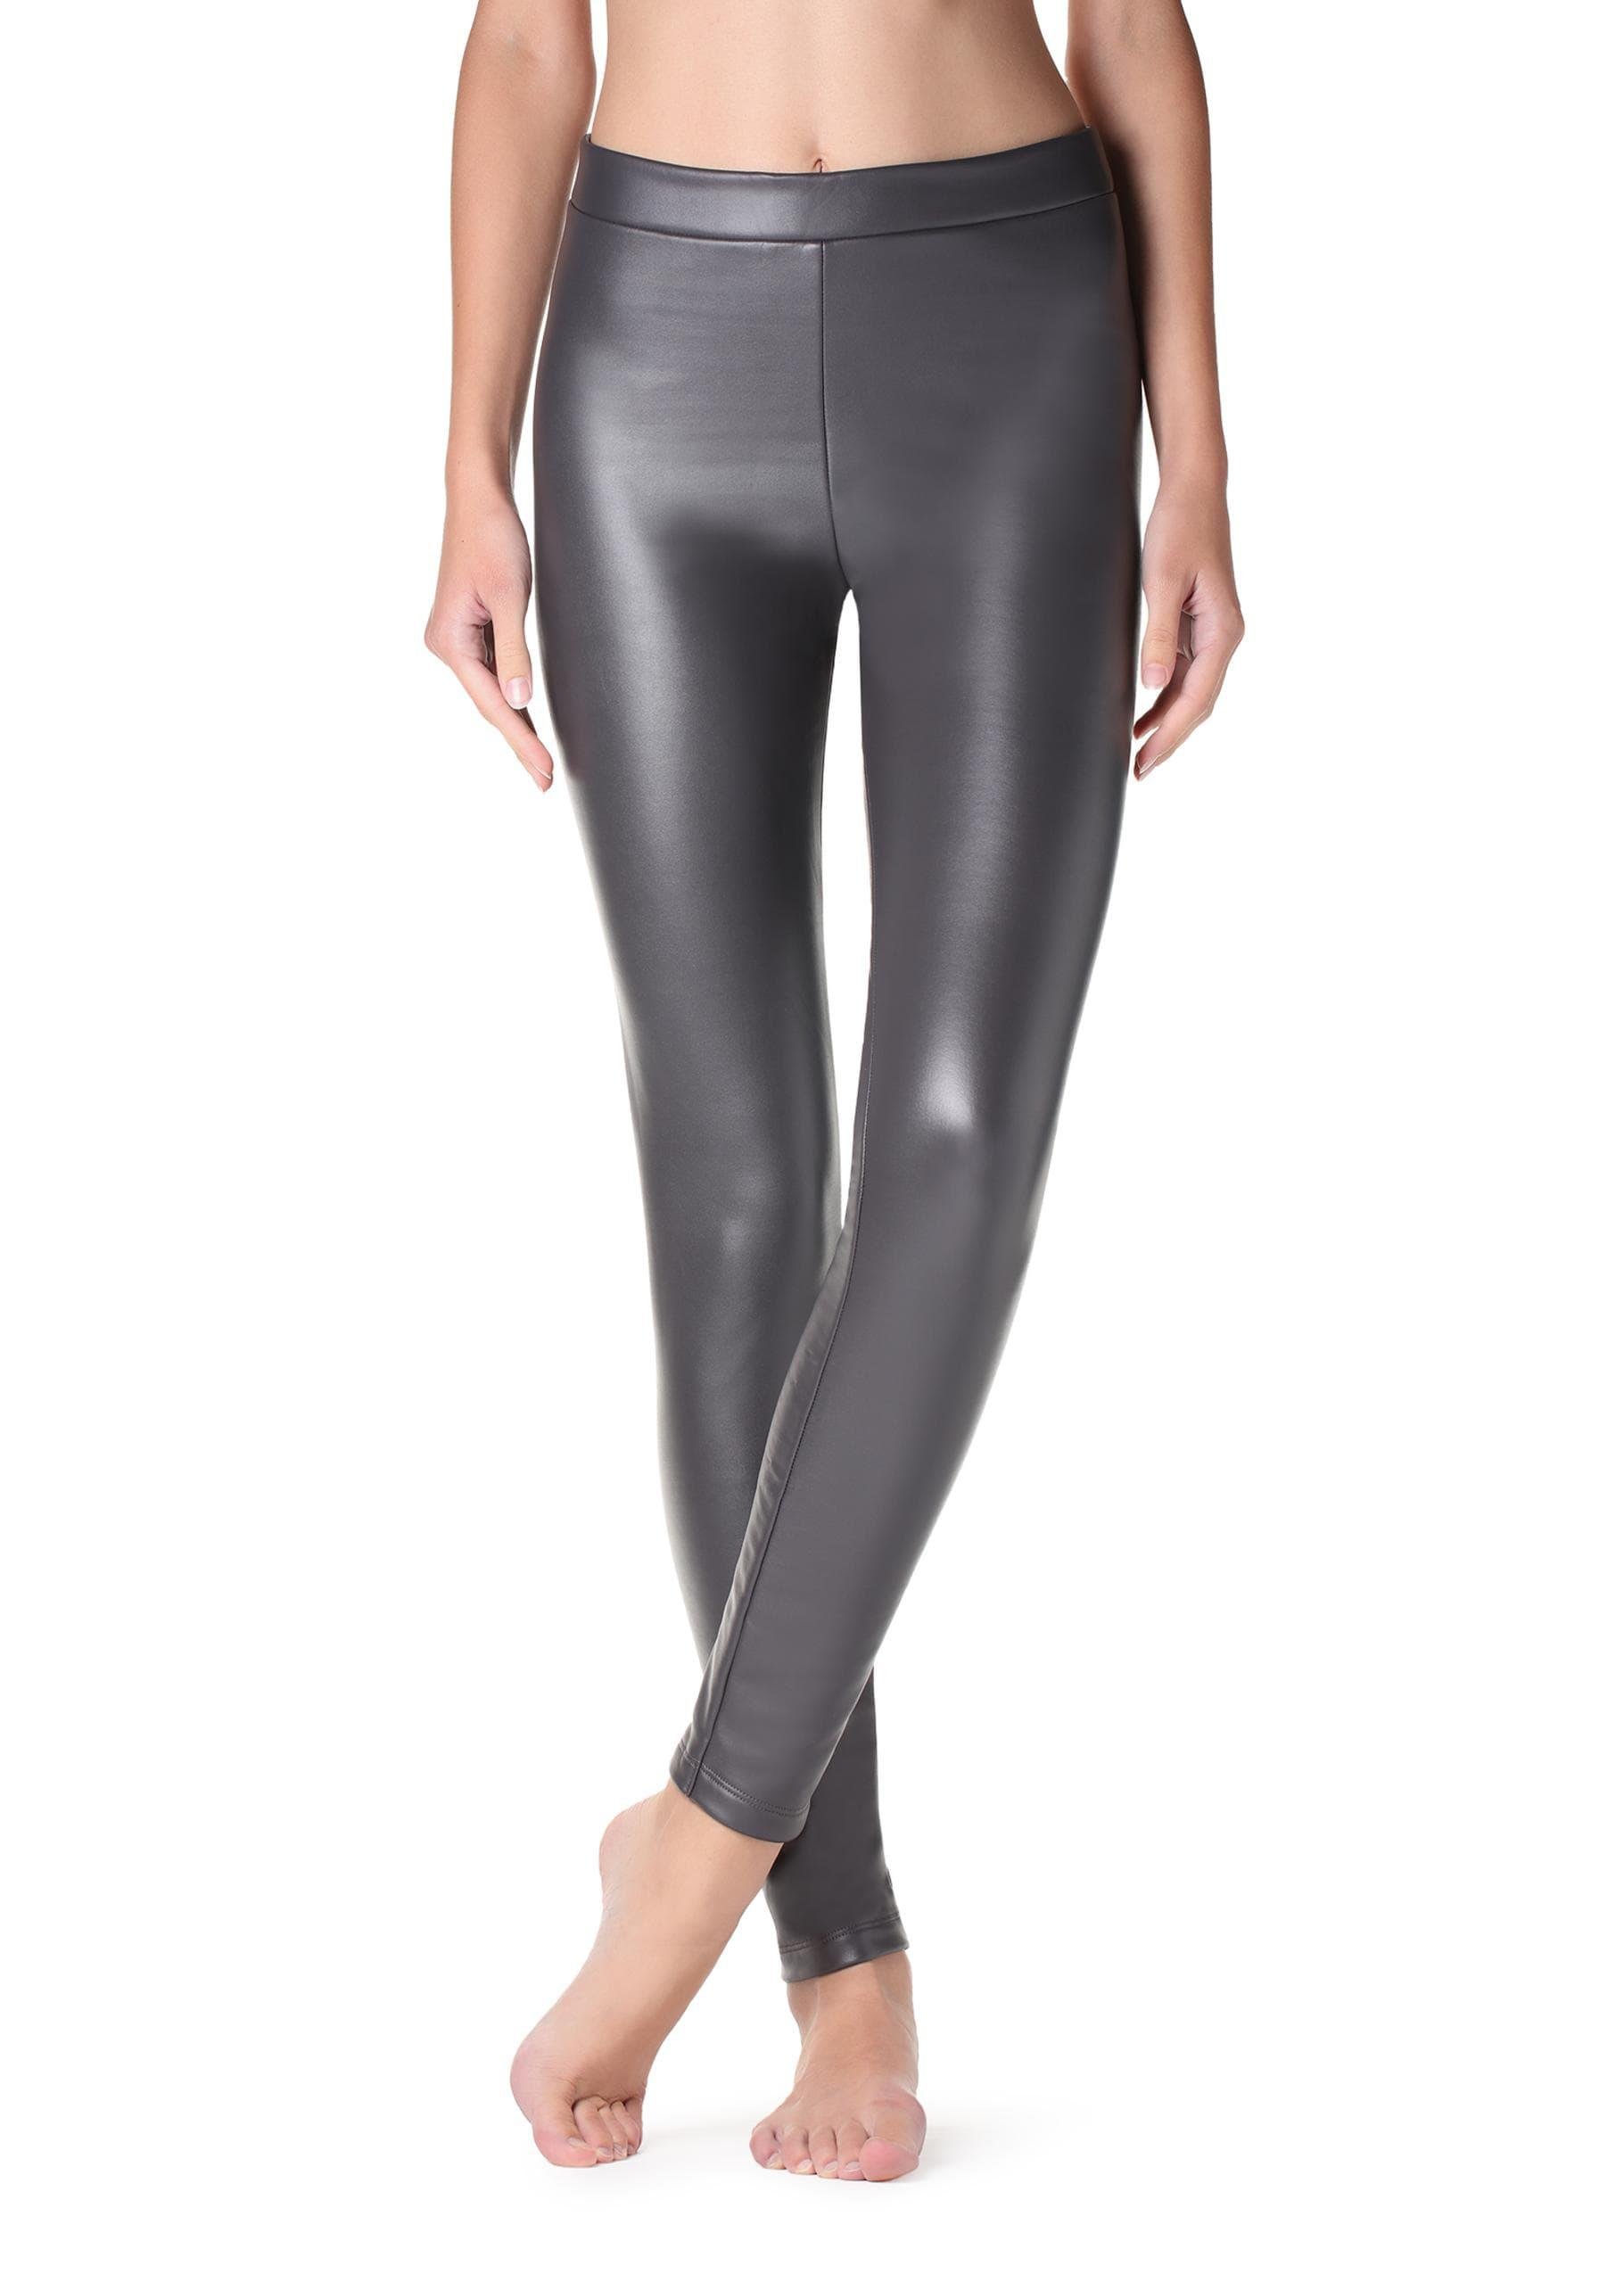 https://cdna.lystit.com/photos/calzedonia/31f7b82a/calzedonia-Grey-Ultra-Thermal-Leather-effect-leggings.jpeg